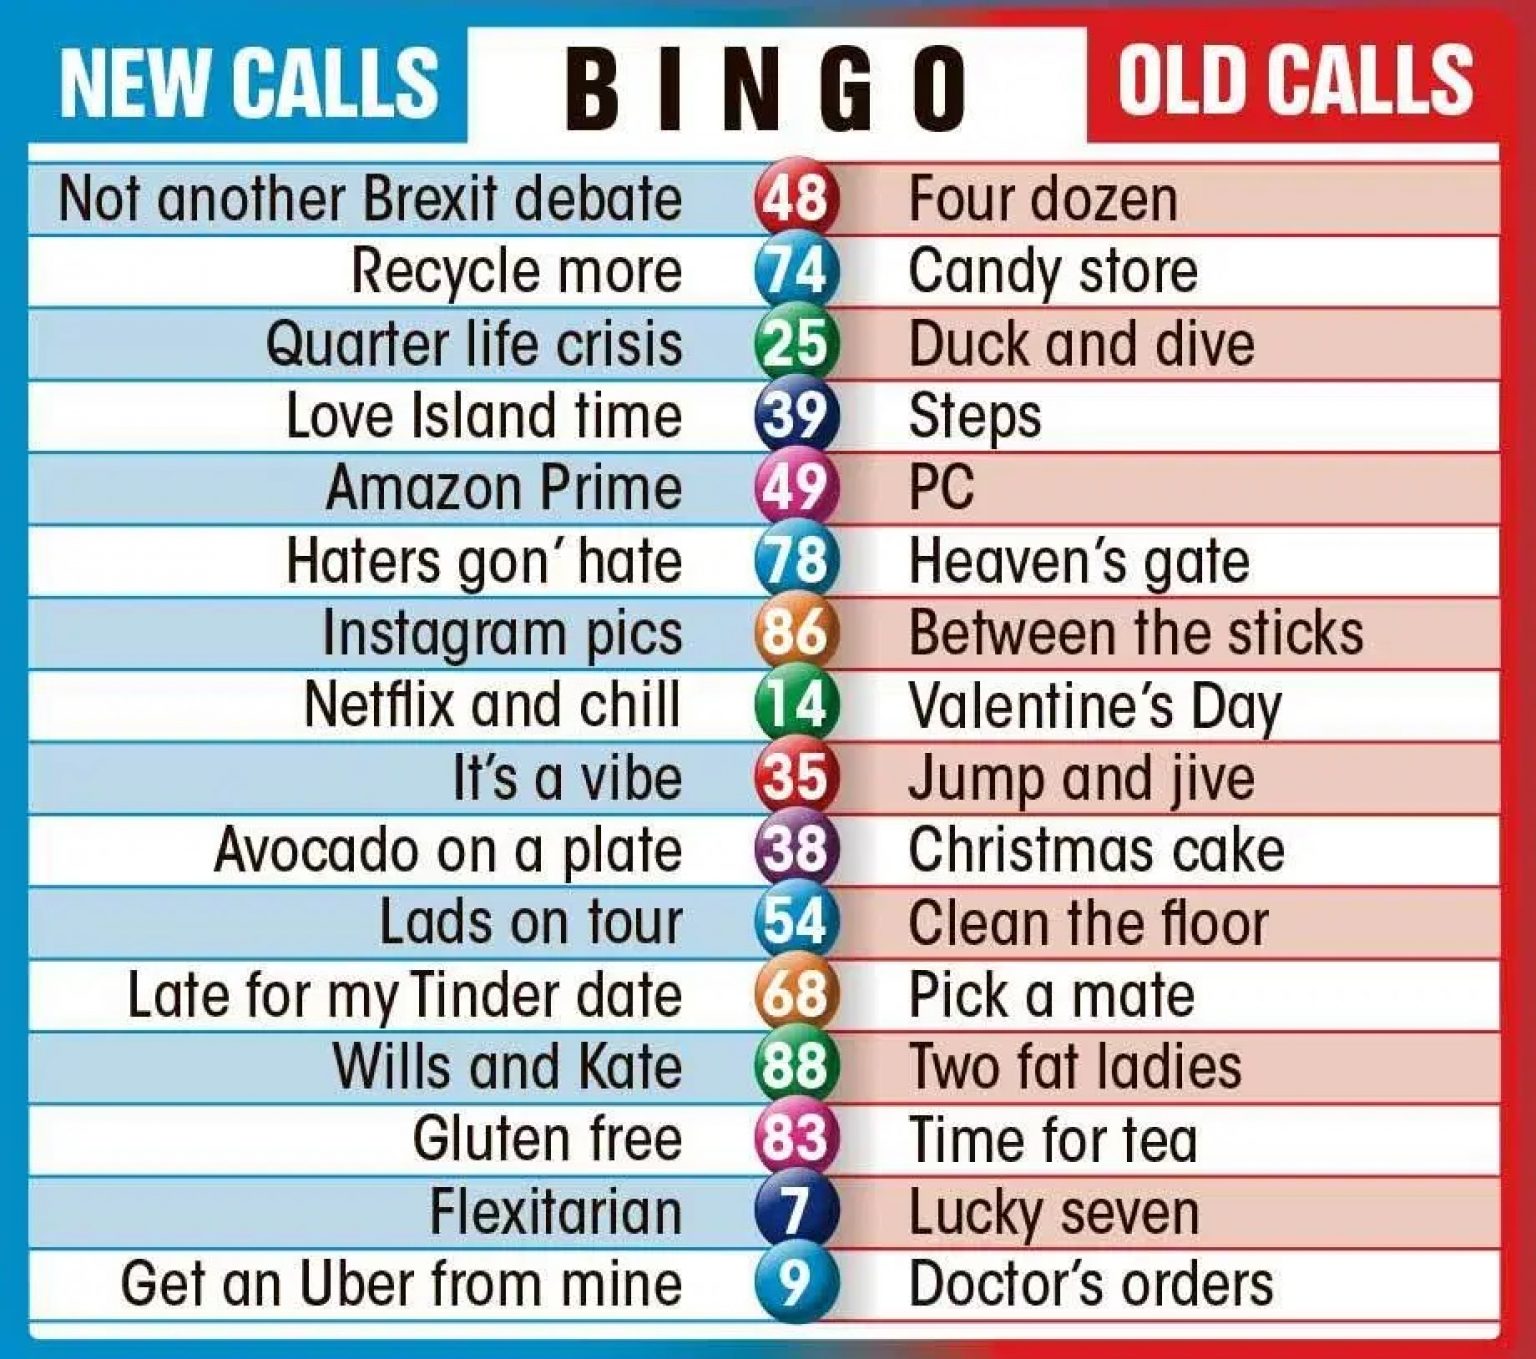 90-uk-bingo-calls-guide-funny-rude-new-bingo-calls